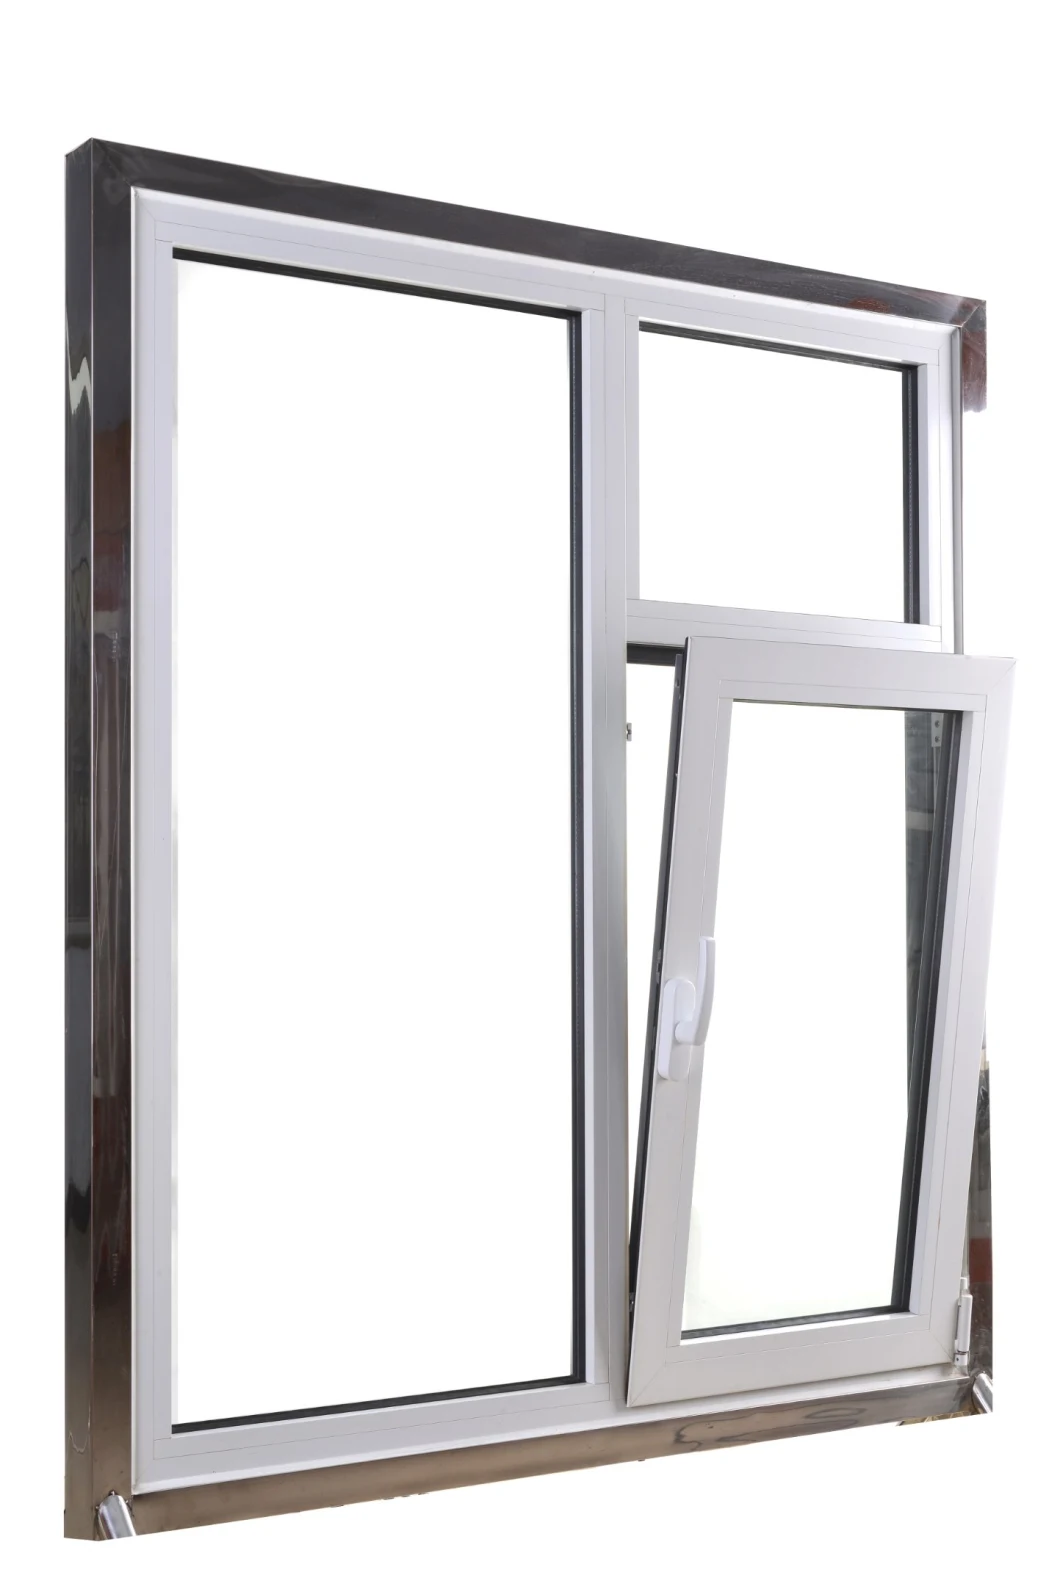 Aluminium Windows / Aluminium Doors Windows / Aluminium Casement Window